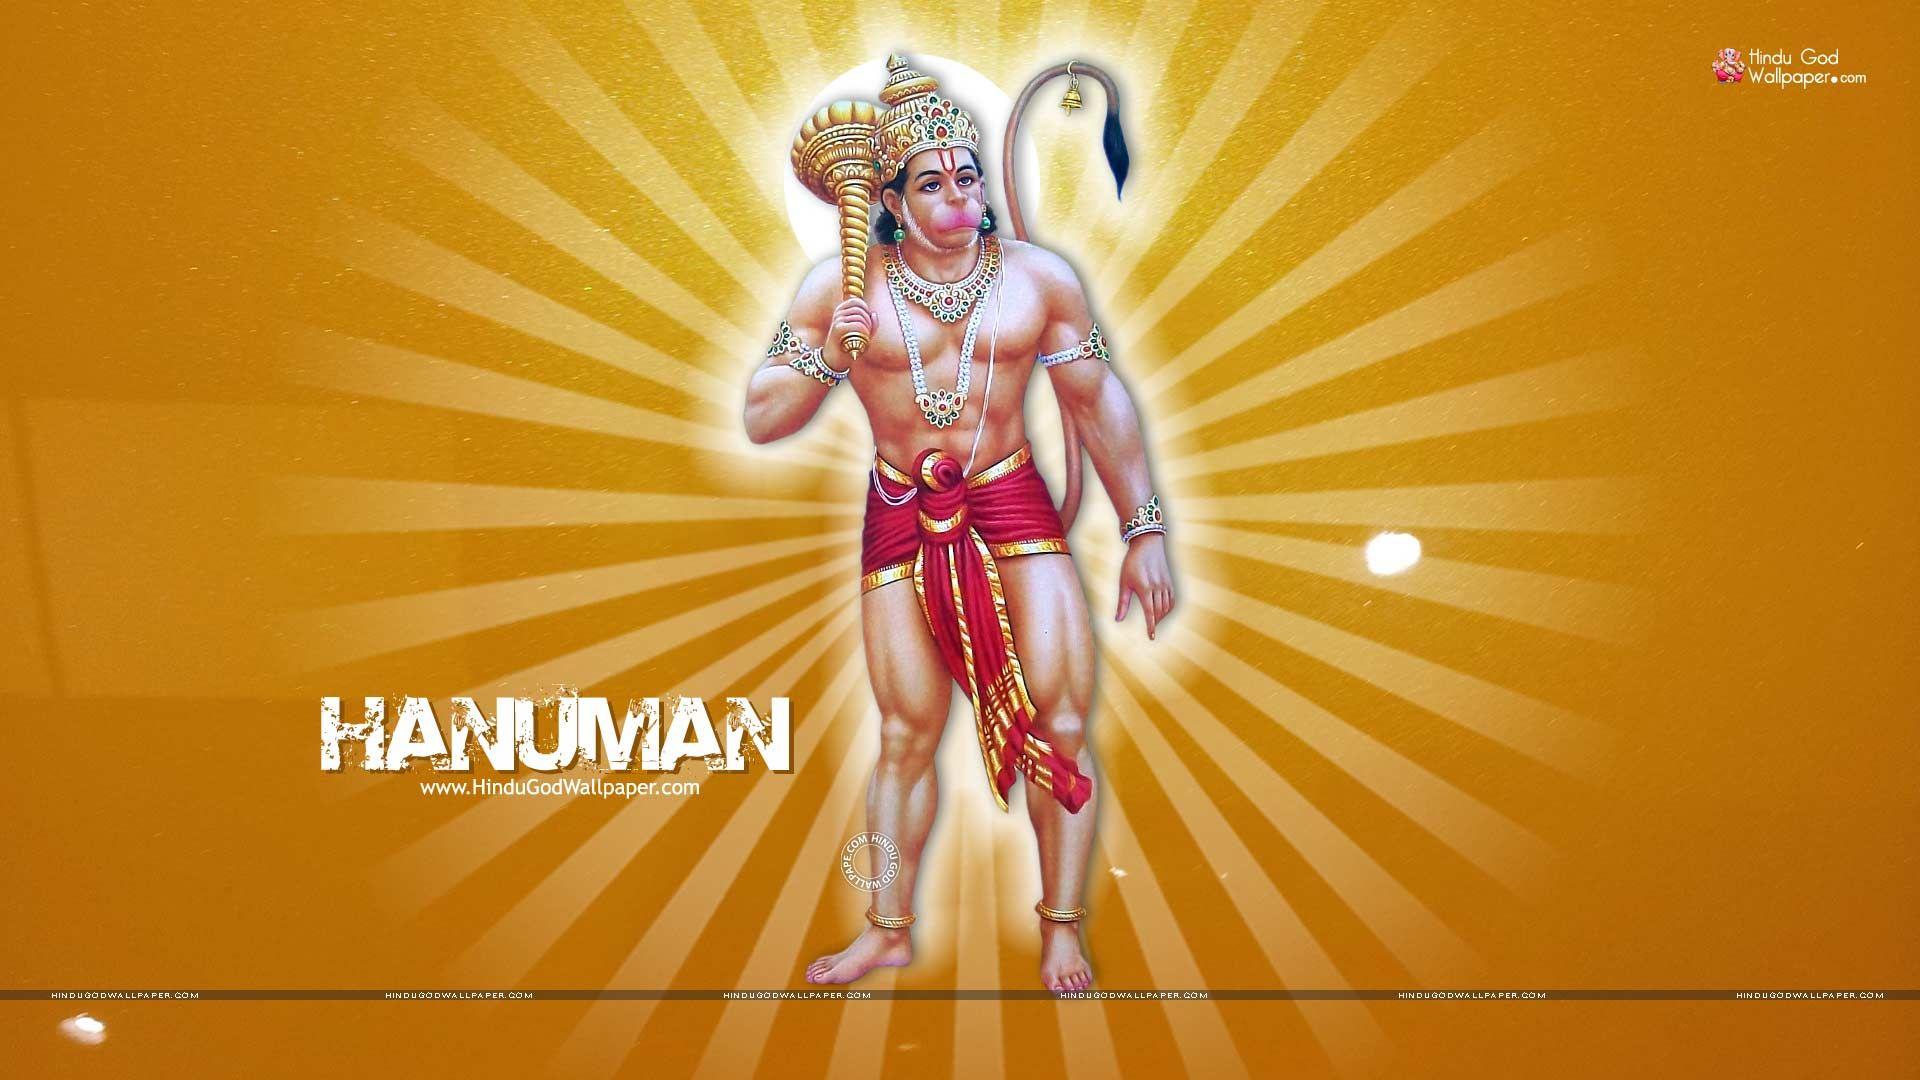 Download Hanuman Bodybuilding HD Wallpaper high resolution quality